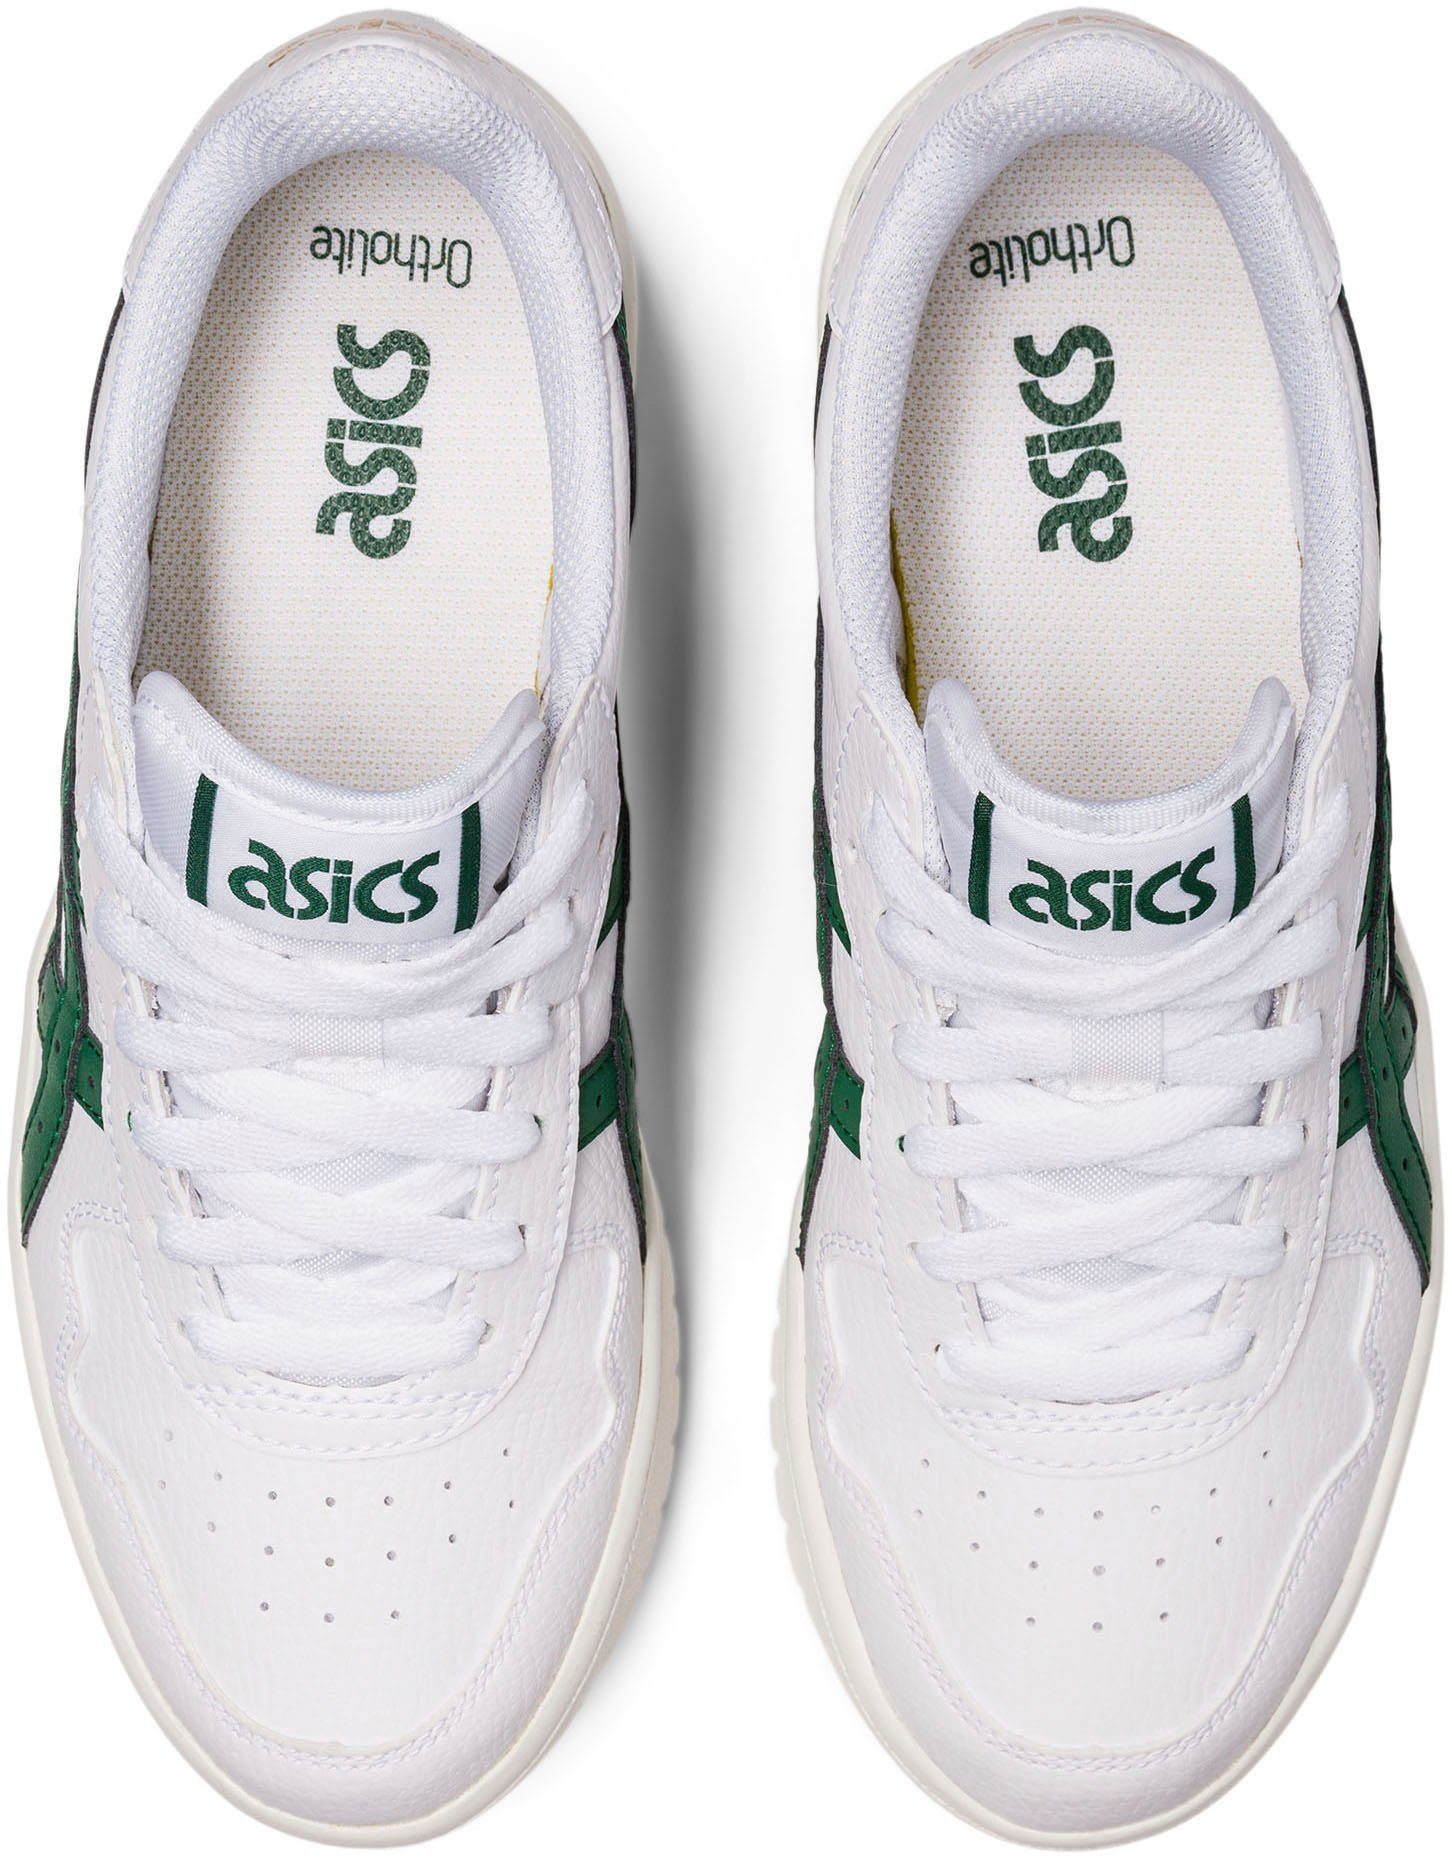 ASICS SportStyle JAPAN PF Sneaker S weiß-grün